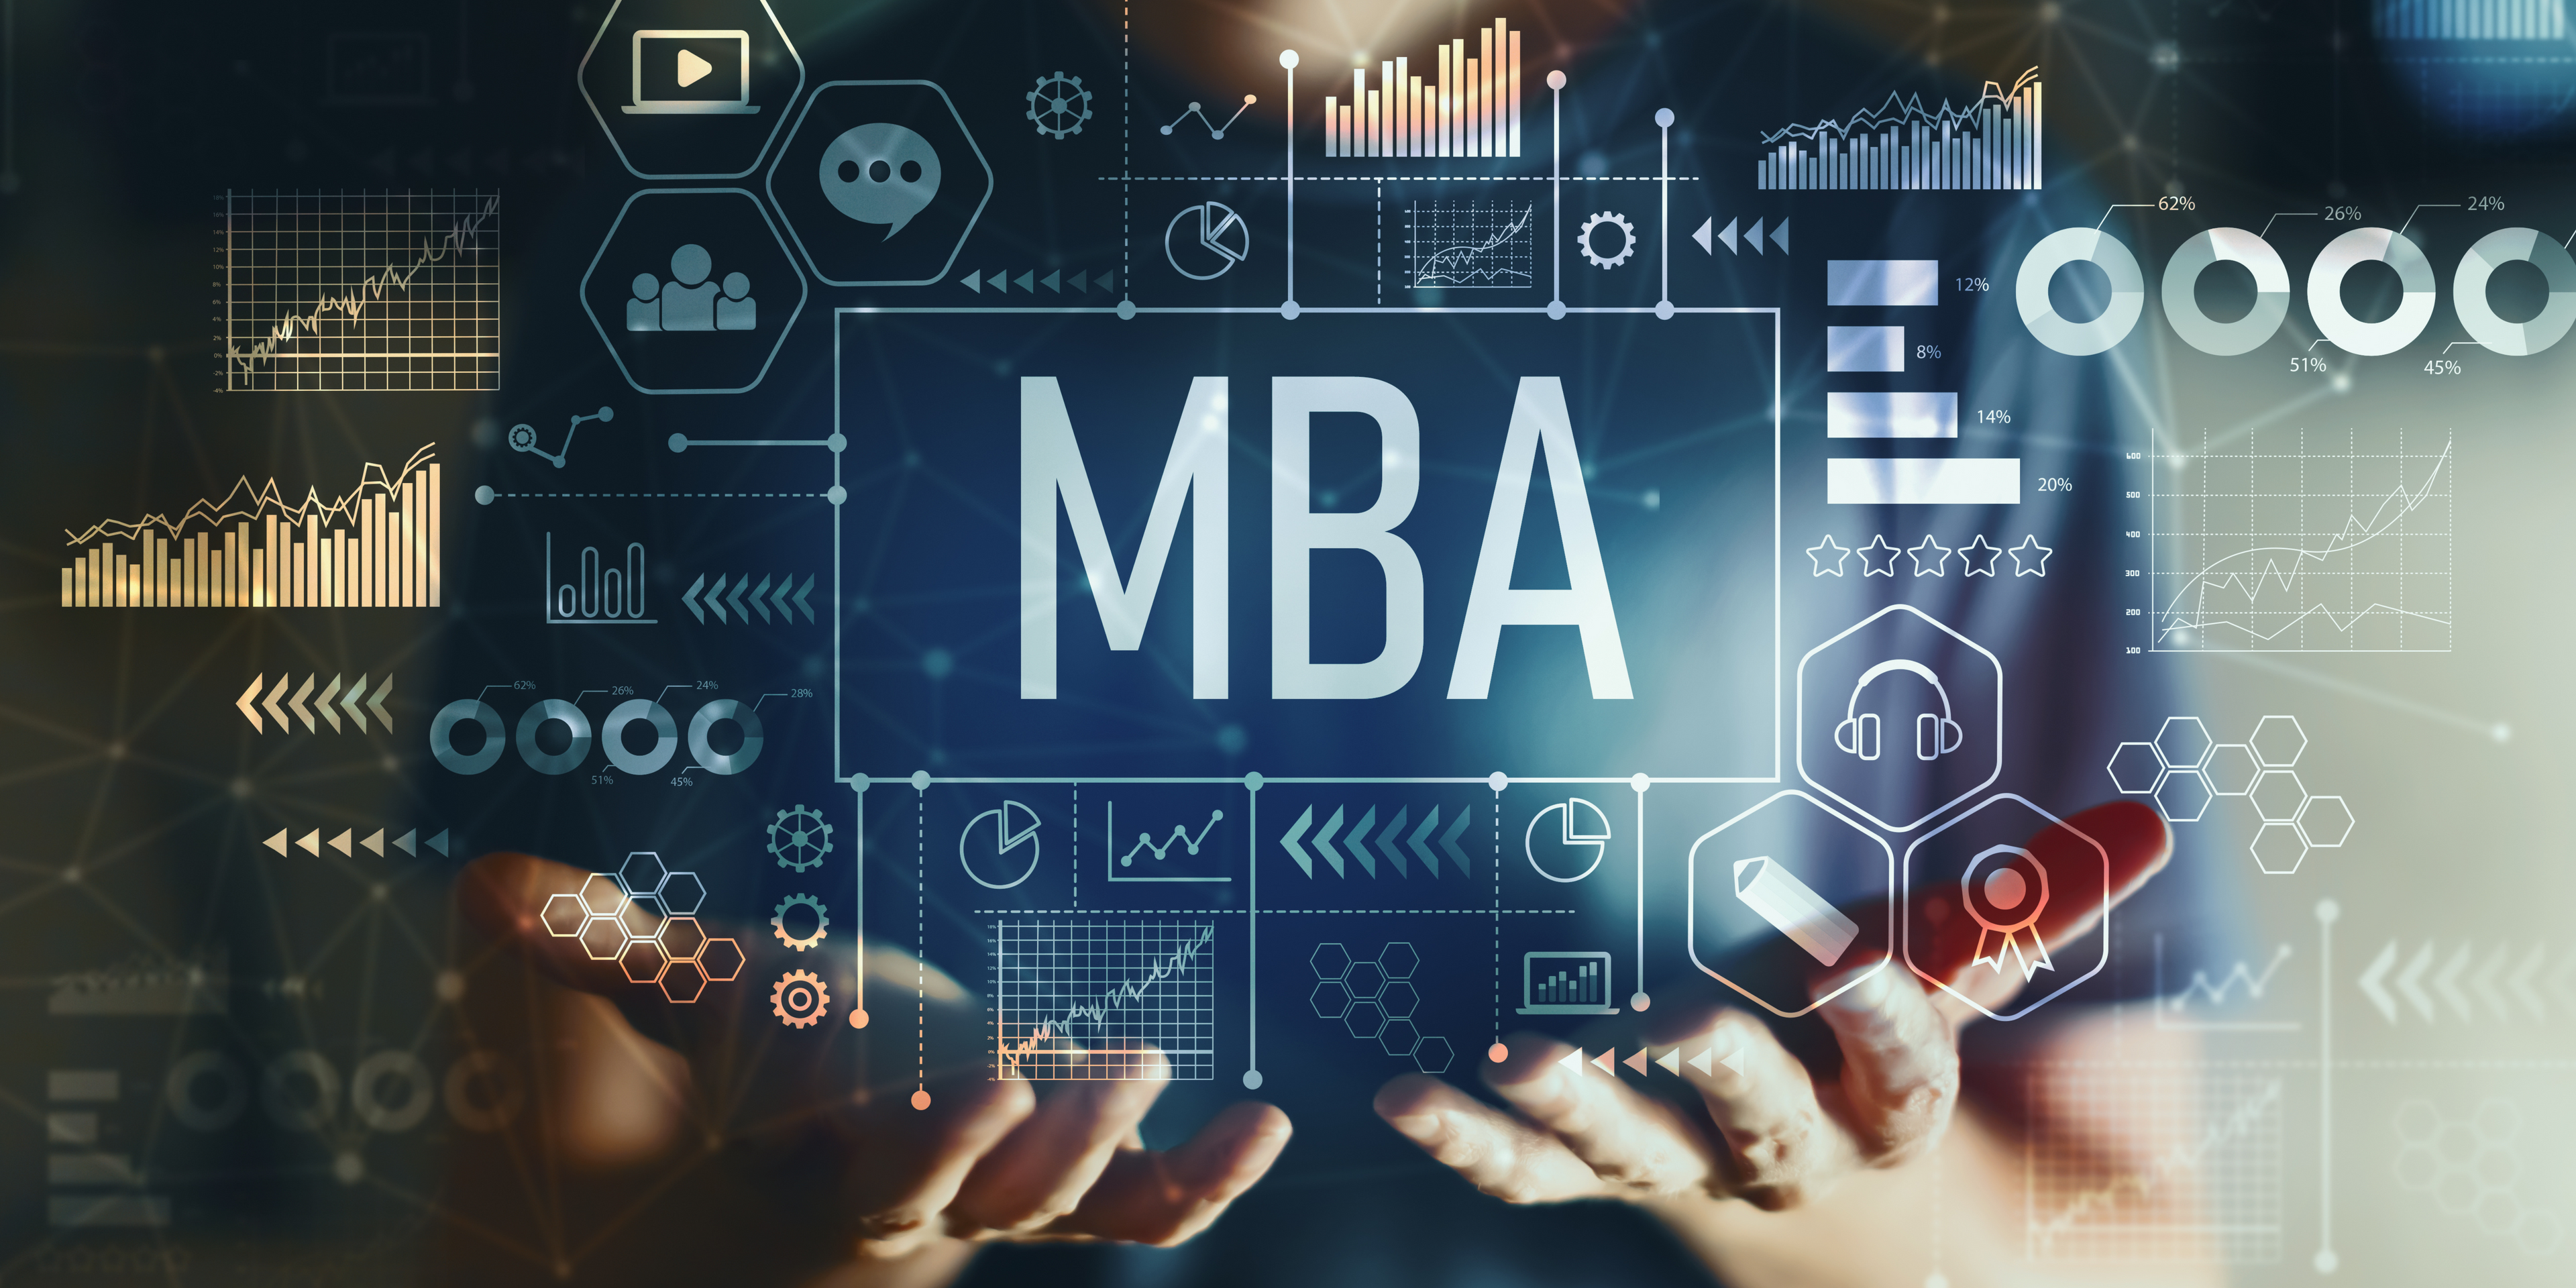 Data Science Degrees: Analytics MBA vs. Master’s in Data Science